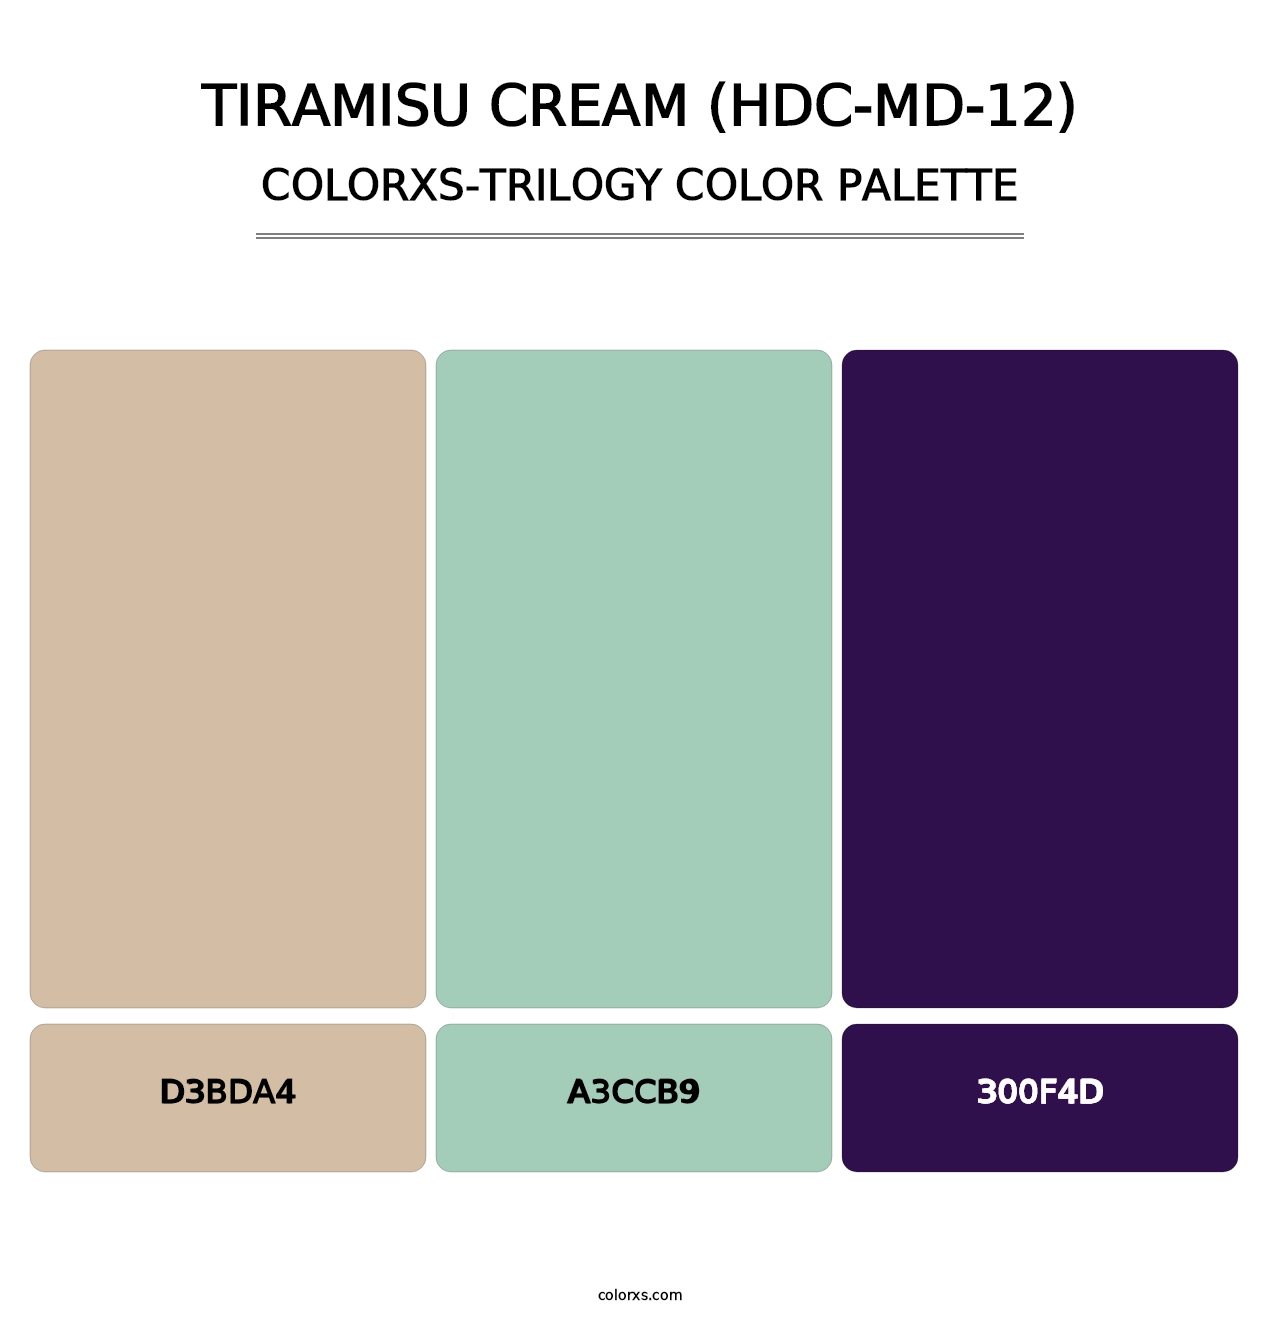 Tiramisu Cream (HDC-MD-12) - Colorxs Trilogy Palette